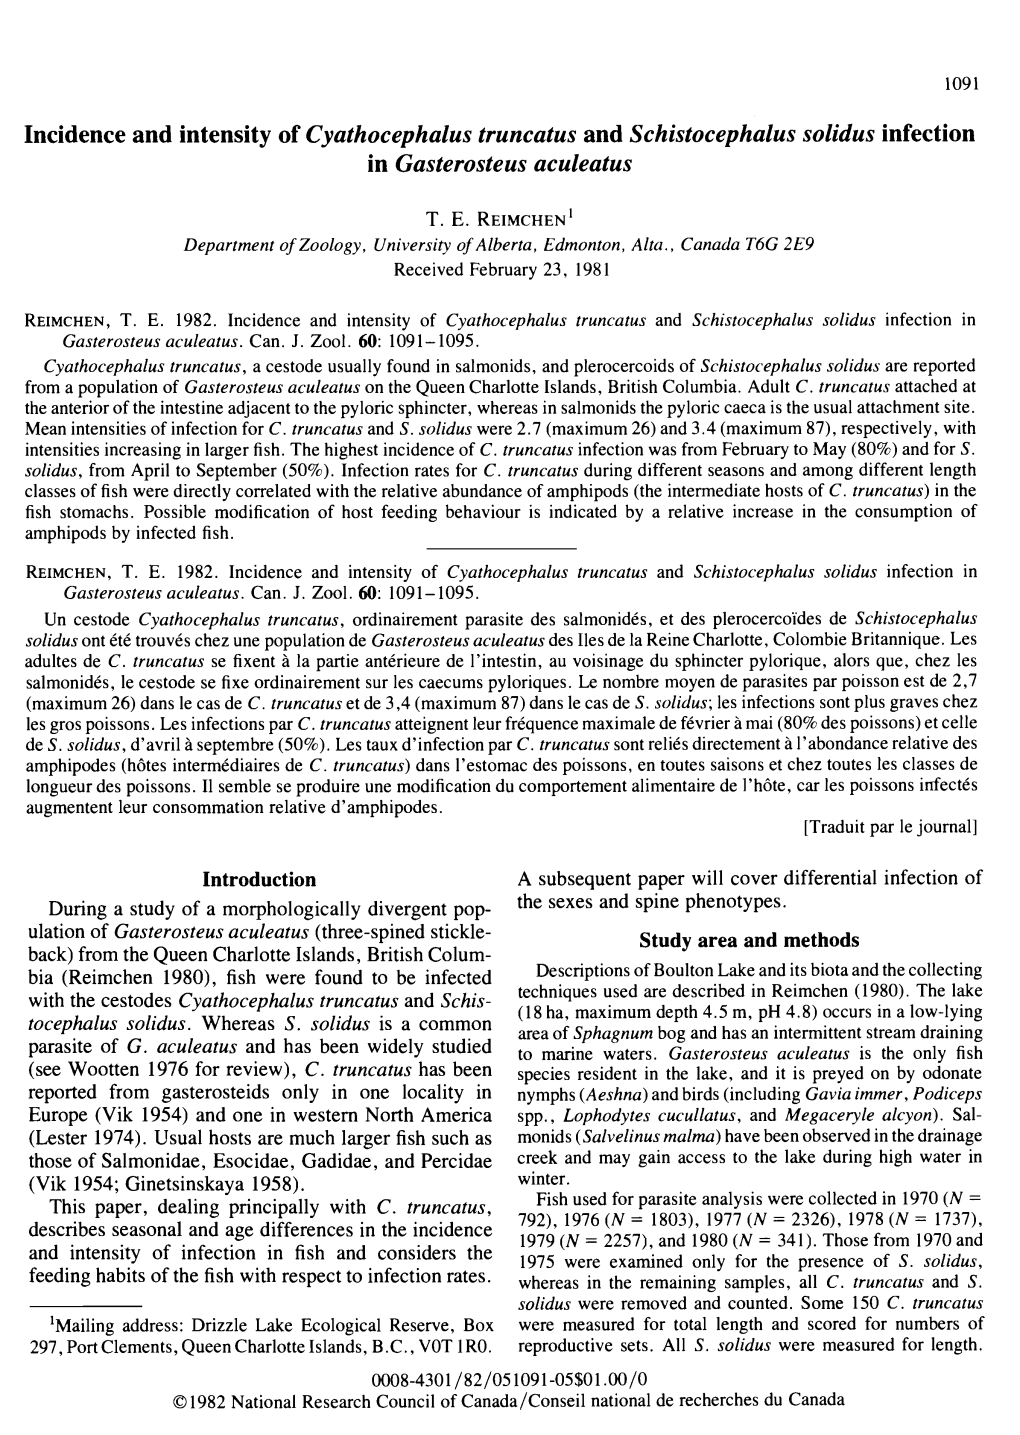 Incidence and Intensity of Cyathocephalus Truncatus and Schistocephalus Solidus Infection in Gasterosteus Aculeatus